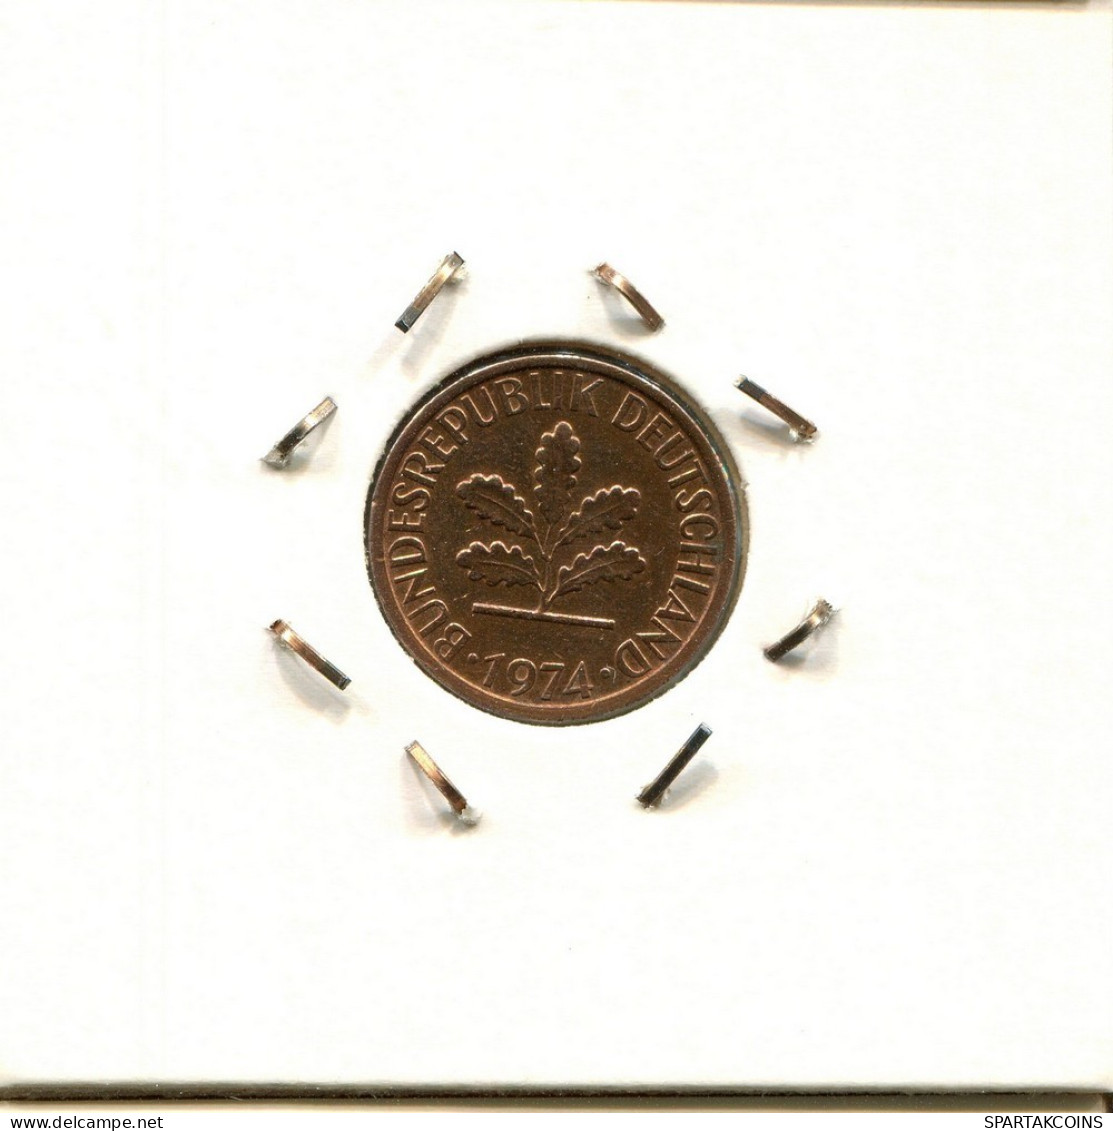 1 PFENNIG 1974 D BRD ALEMANIA Moneda GERMANY #DC039.E.A - 1 Pfennig